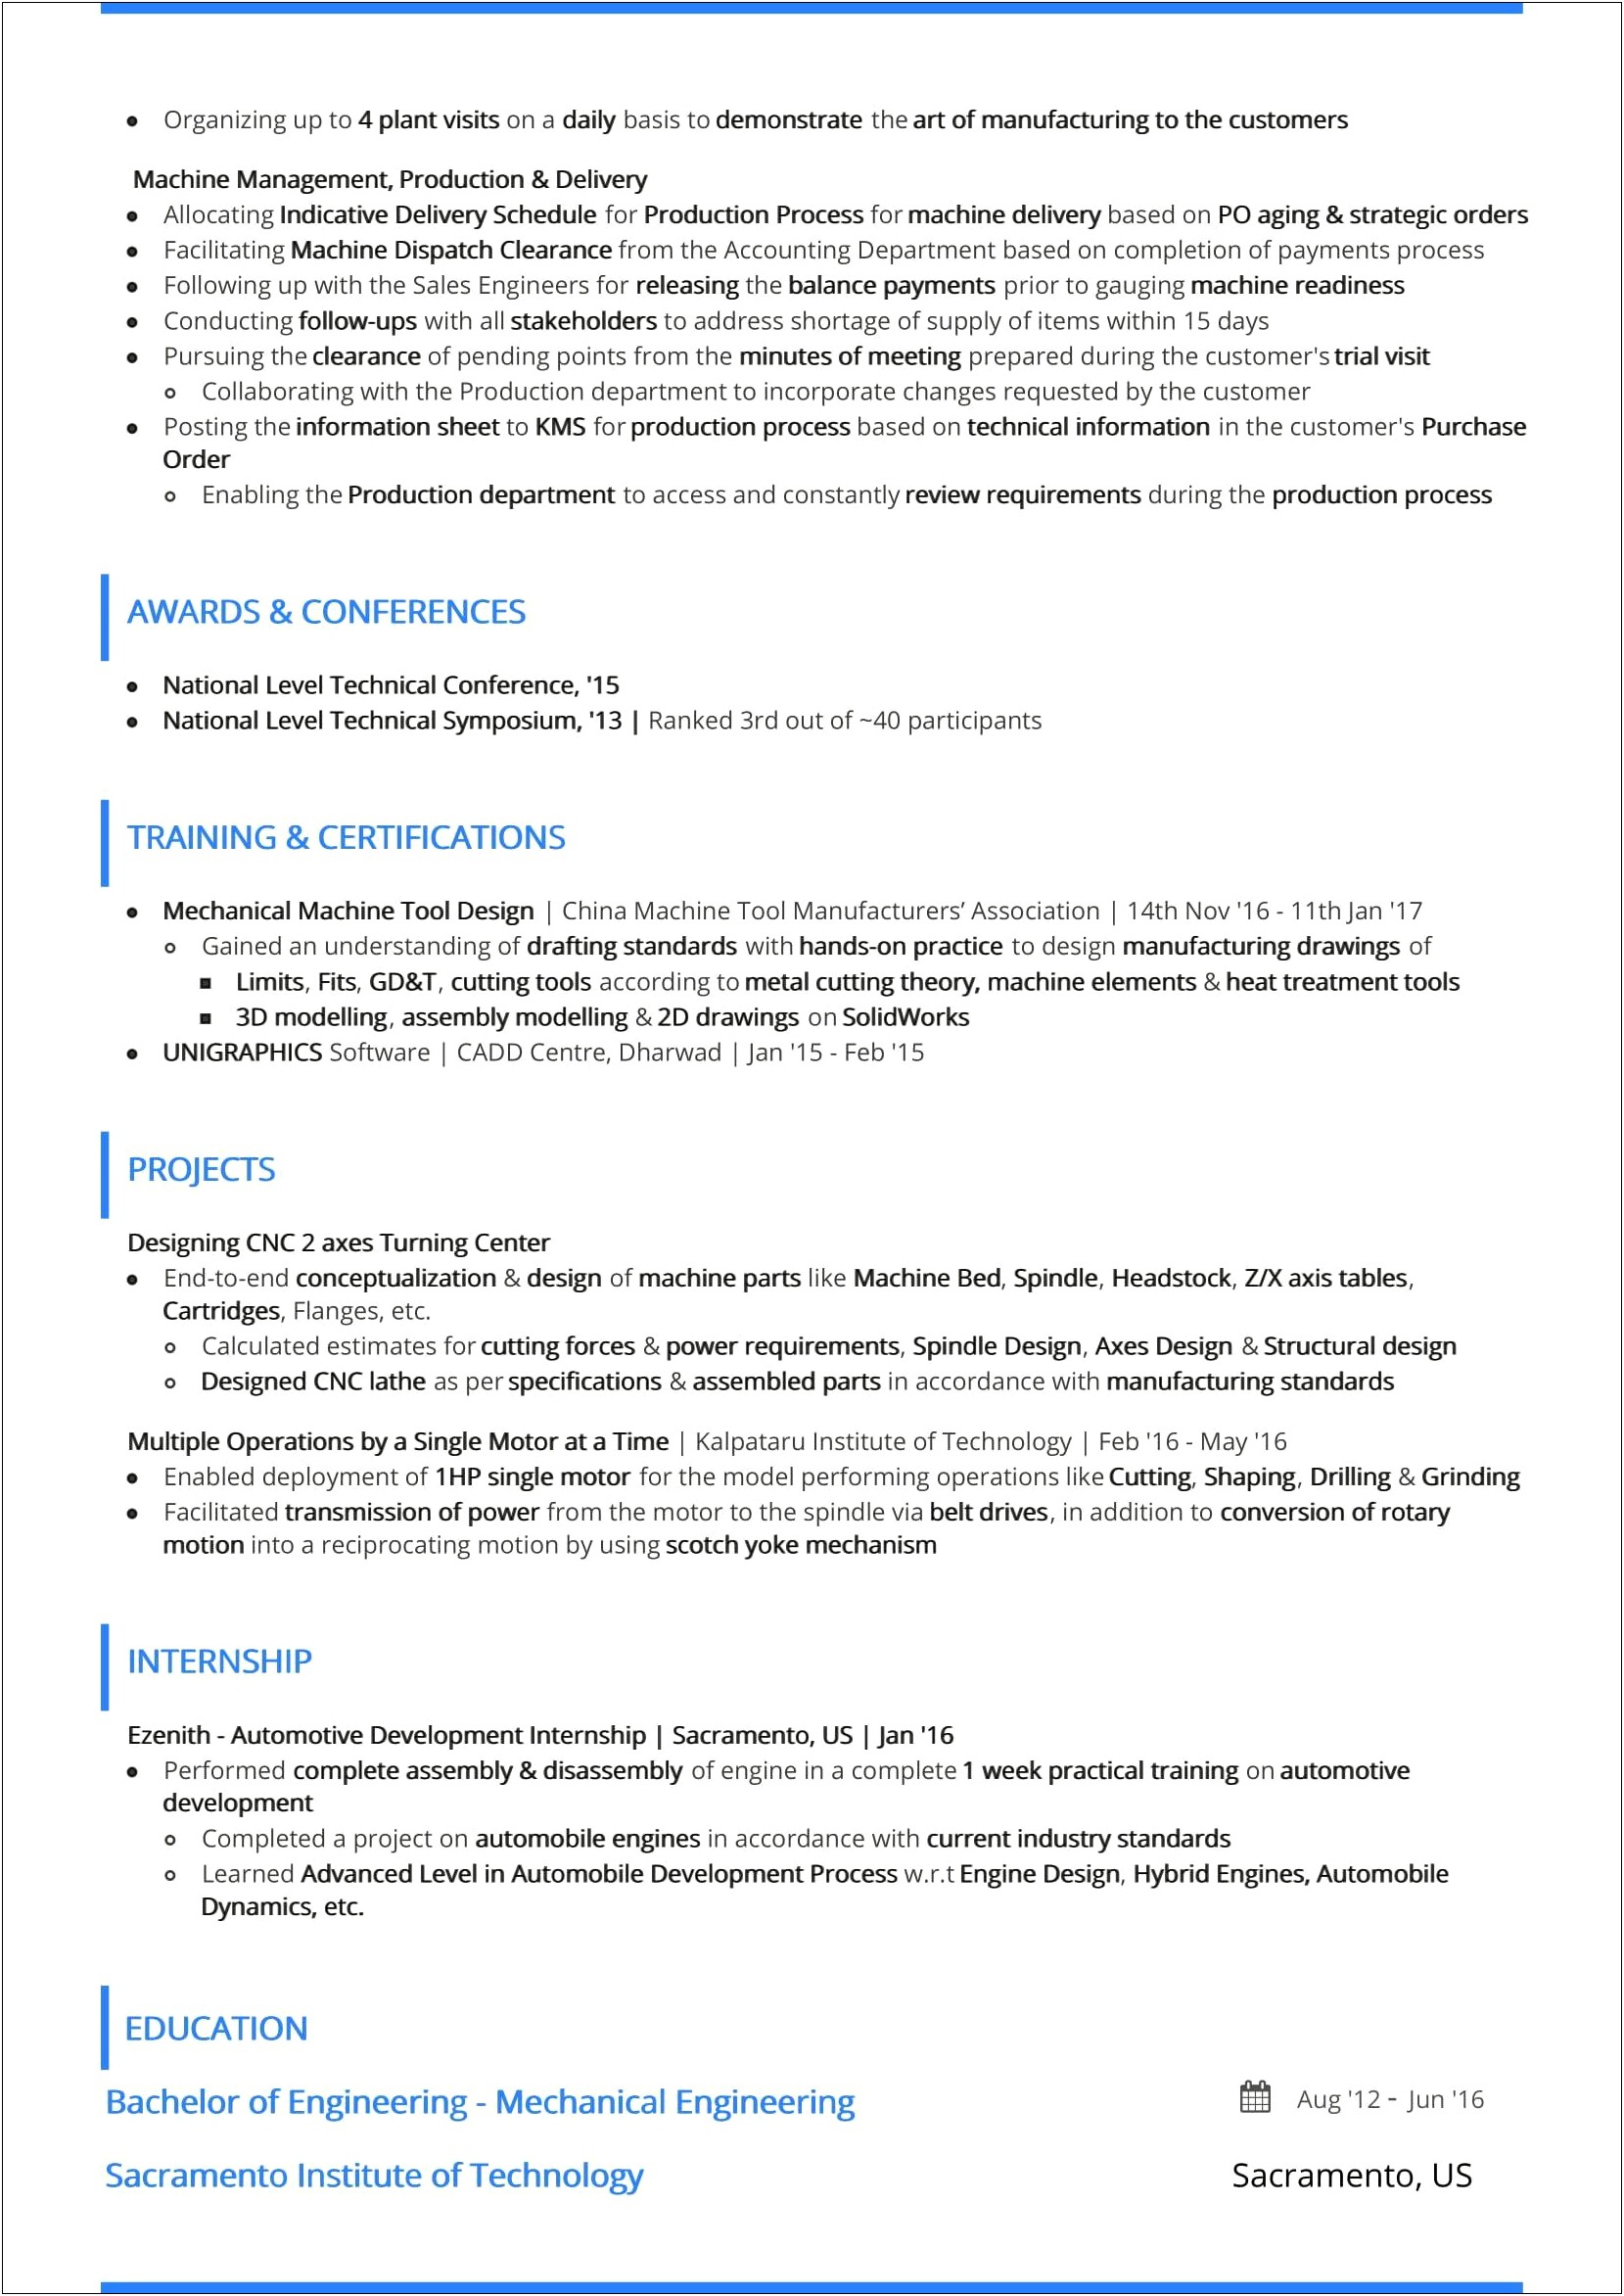 Resume Profile Summary For Career Change